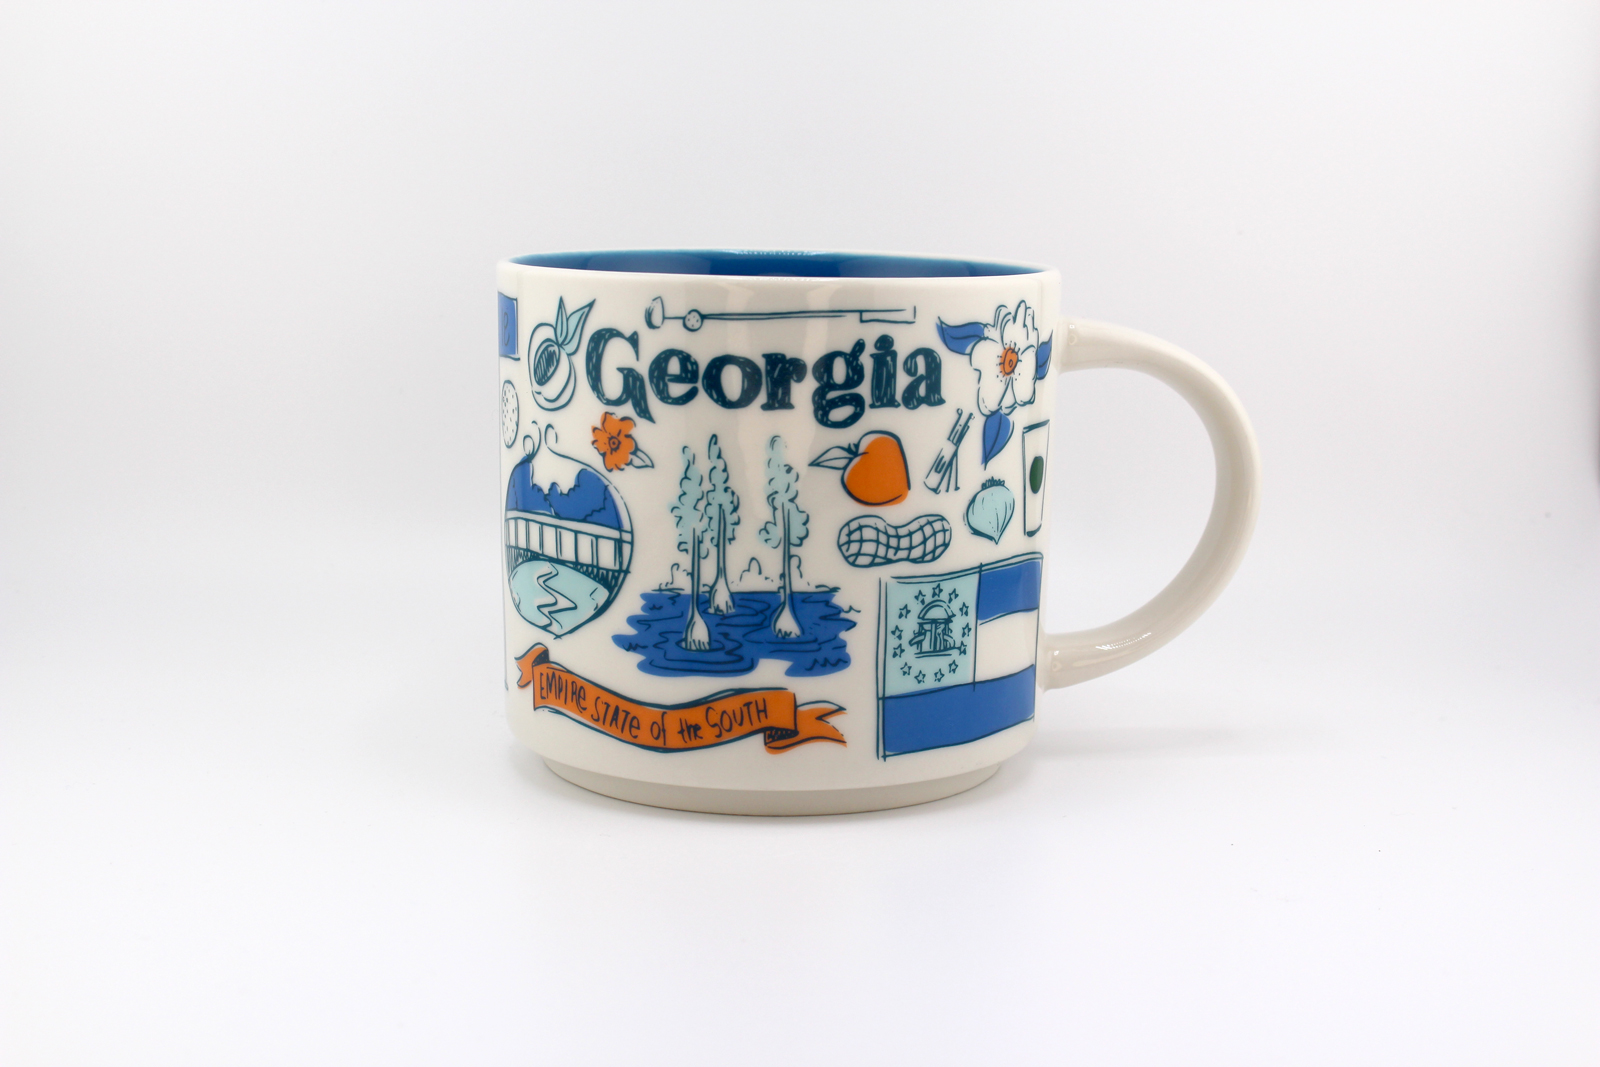 Georgia Mug: Starbucks Been There Series